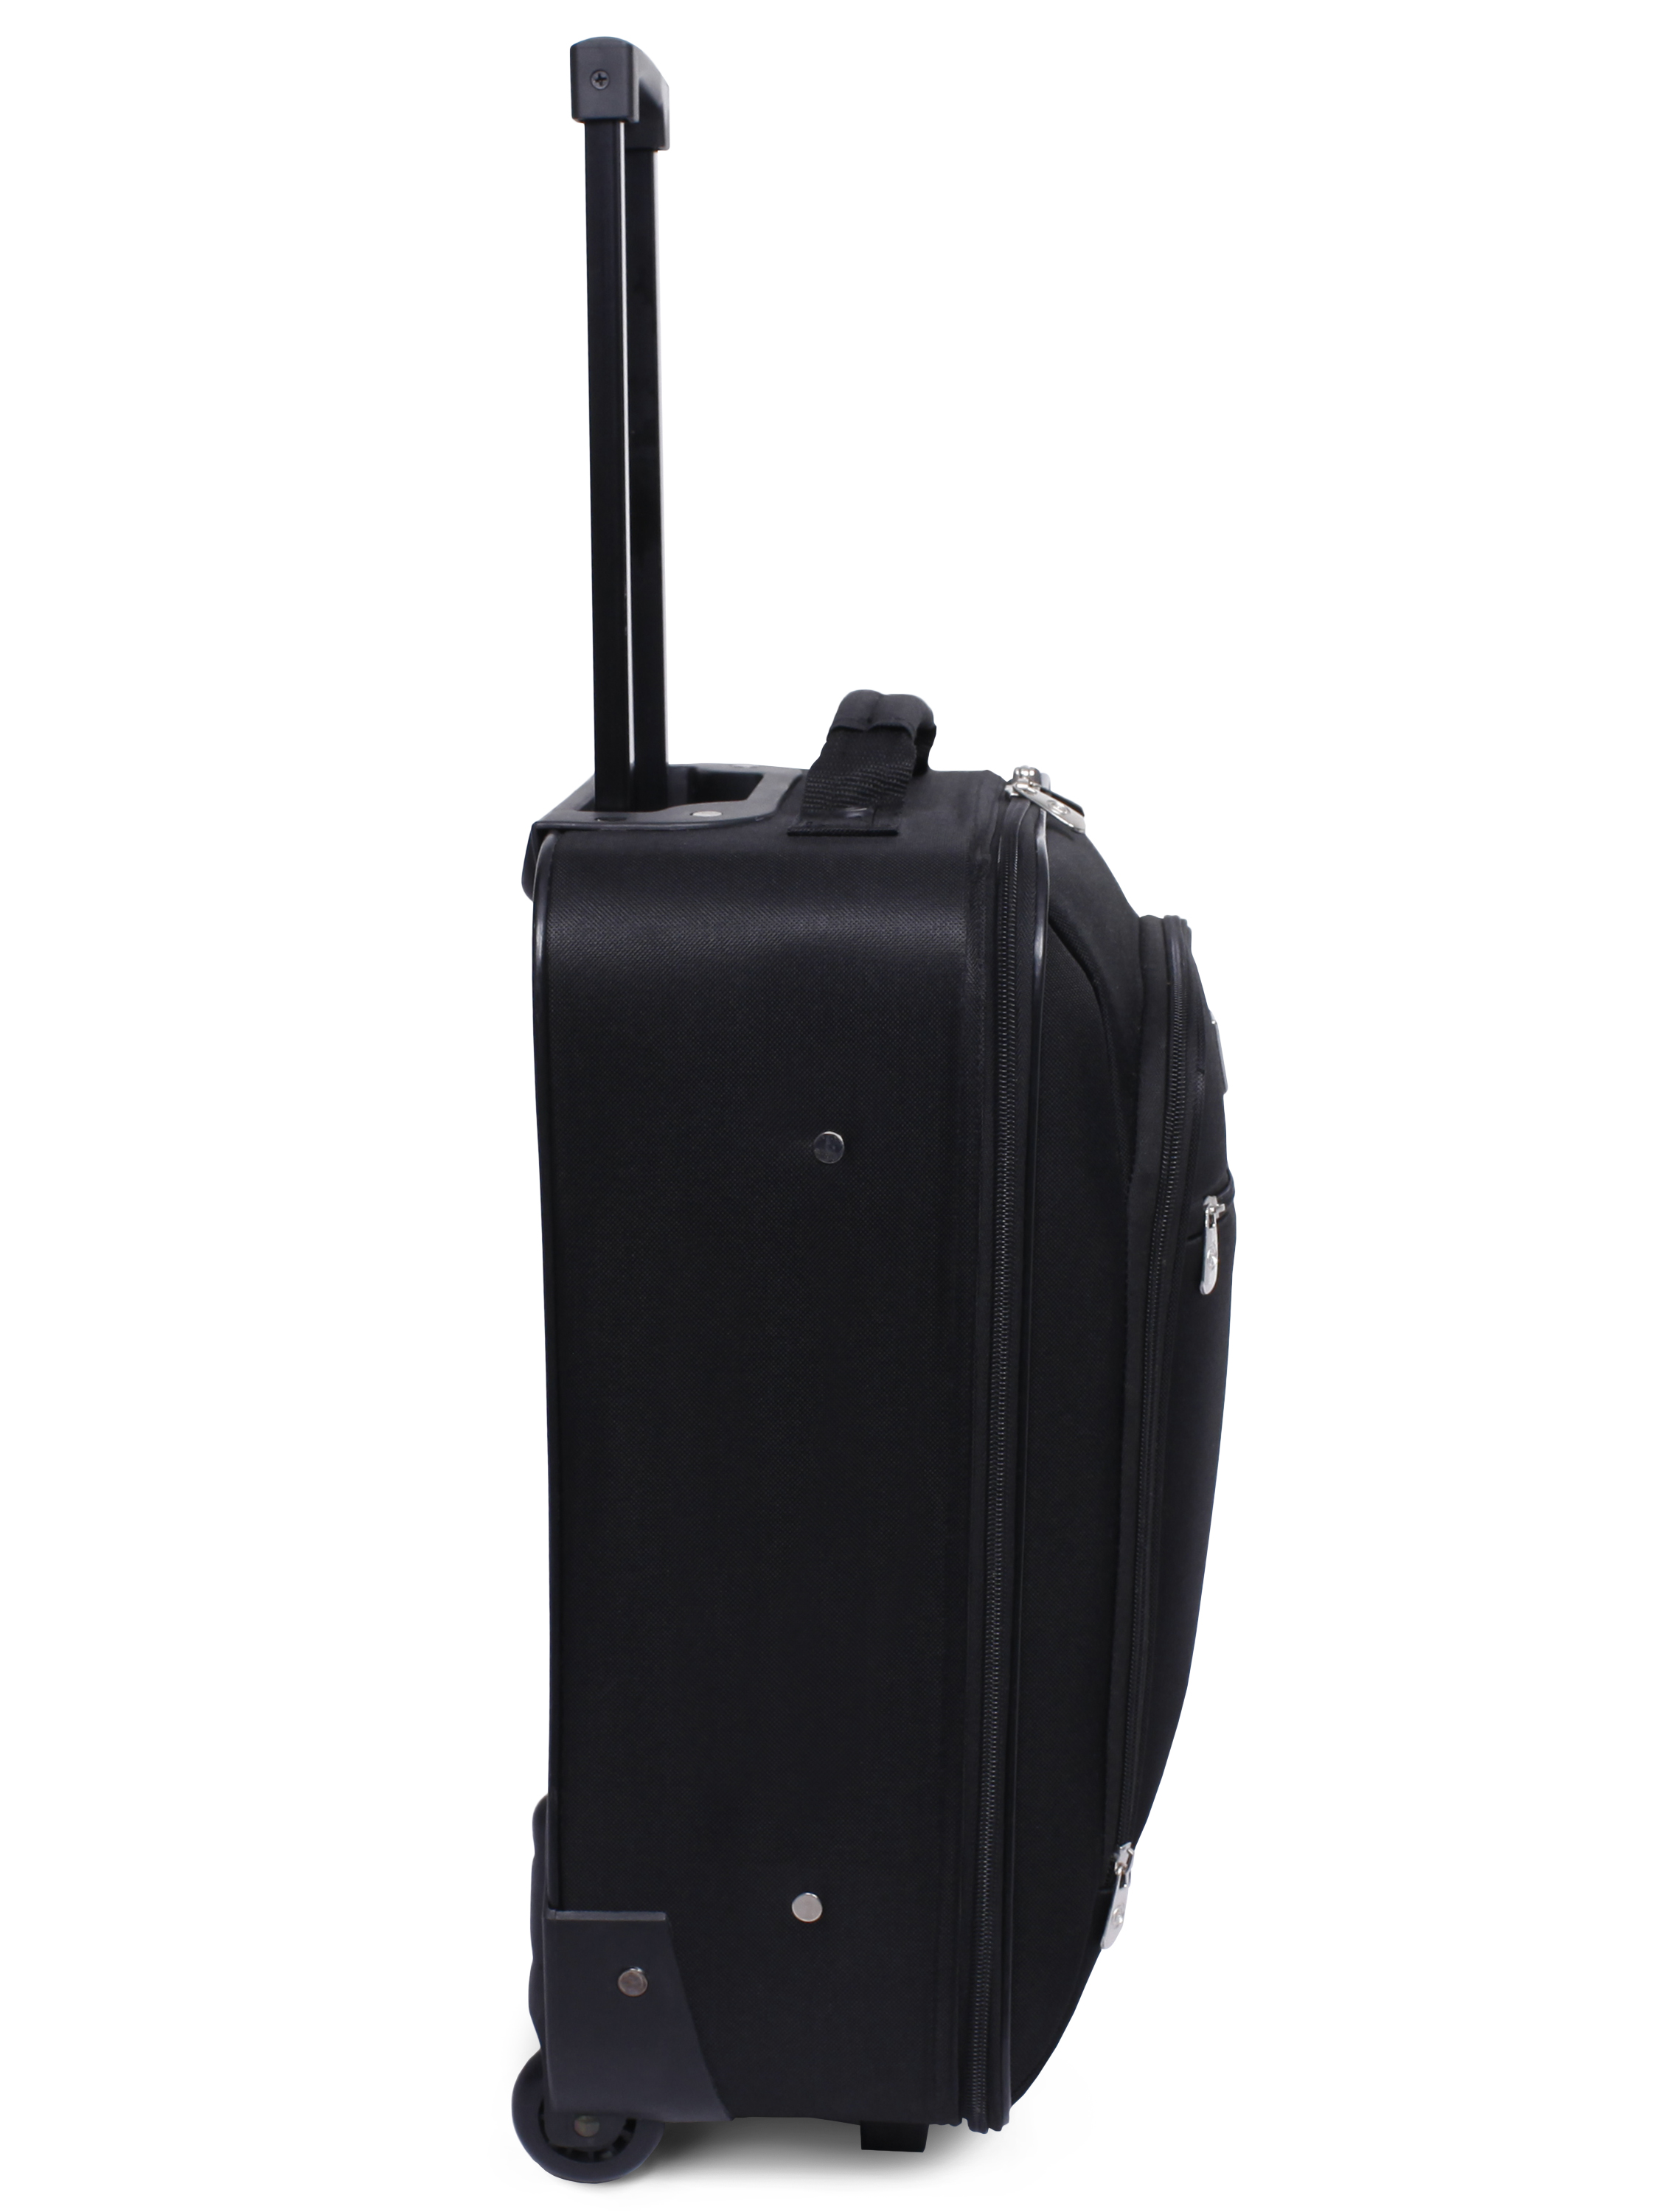 Protege Pilot Case 18" Softside Carry-on Luggage, Black - image 5 of 10